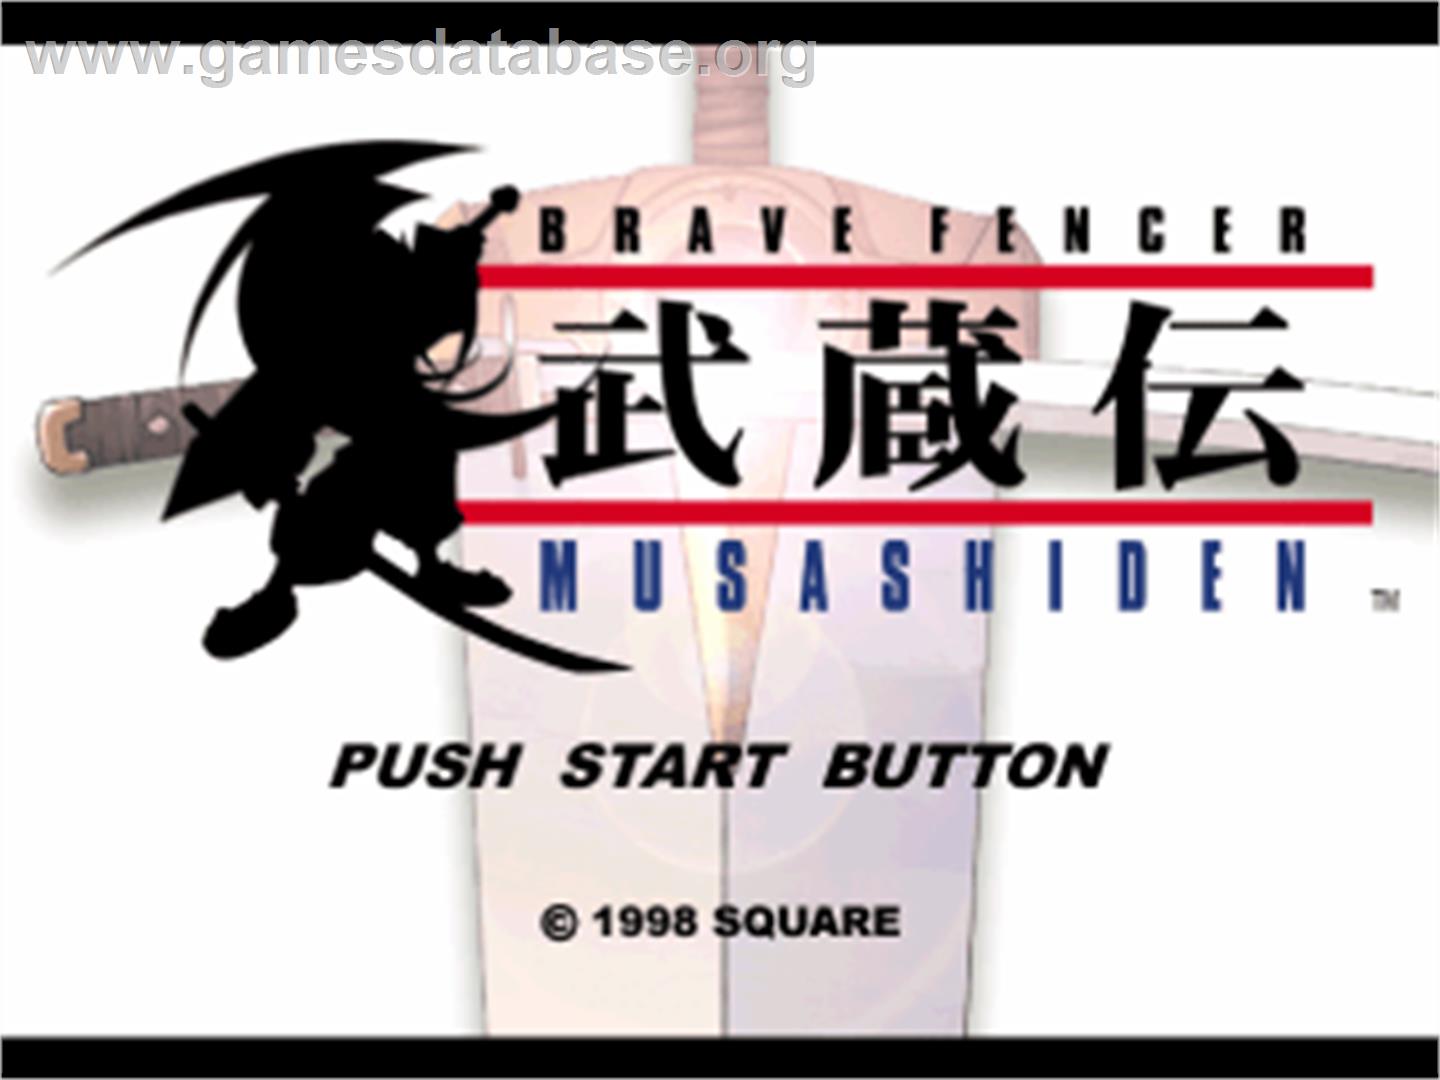 Brave Fencer Musashi - Sony Playstation - Artwork - Title Screen